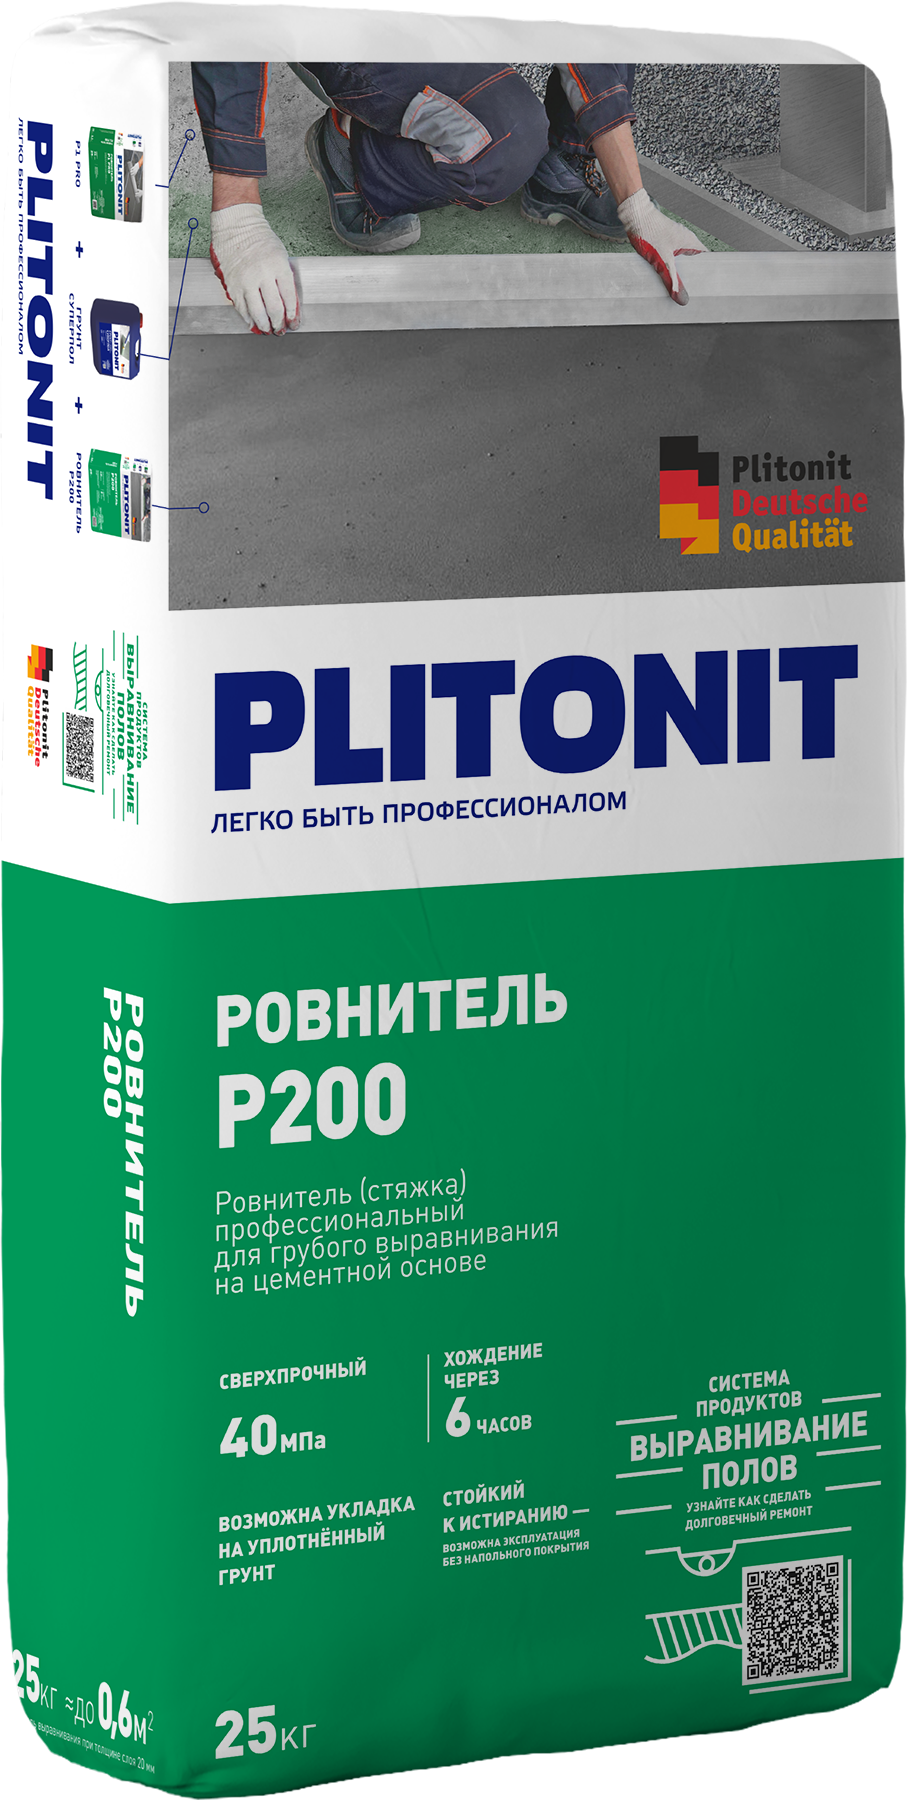 Ровнитель PLITONIT P200 -25